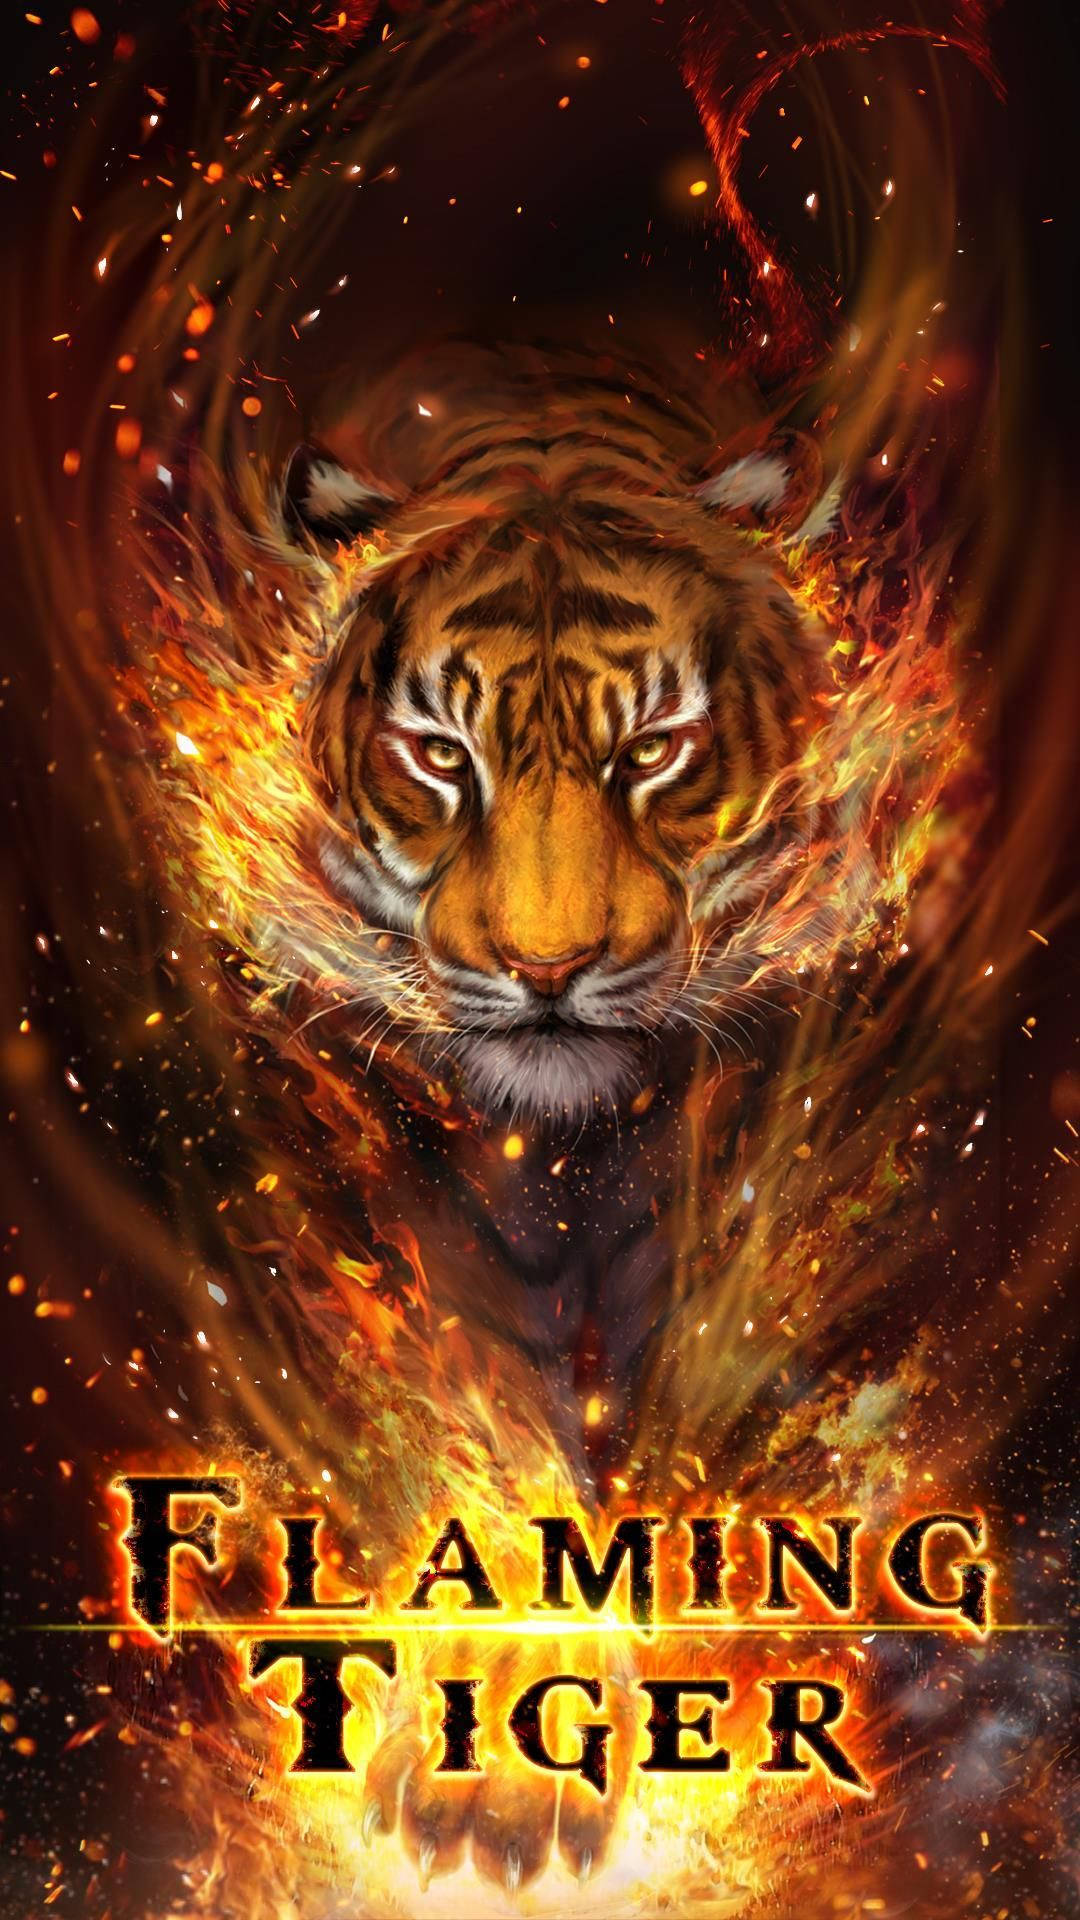 Cool Flaming Tiger Poster